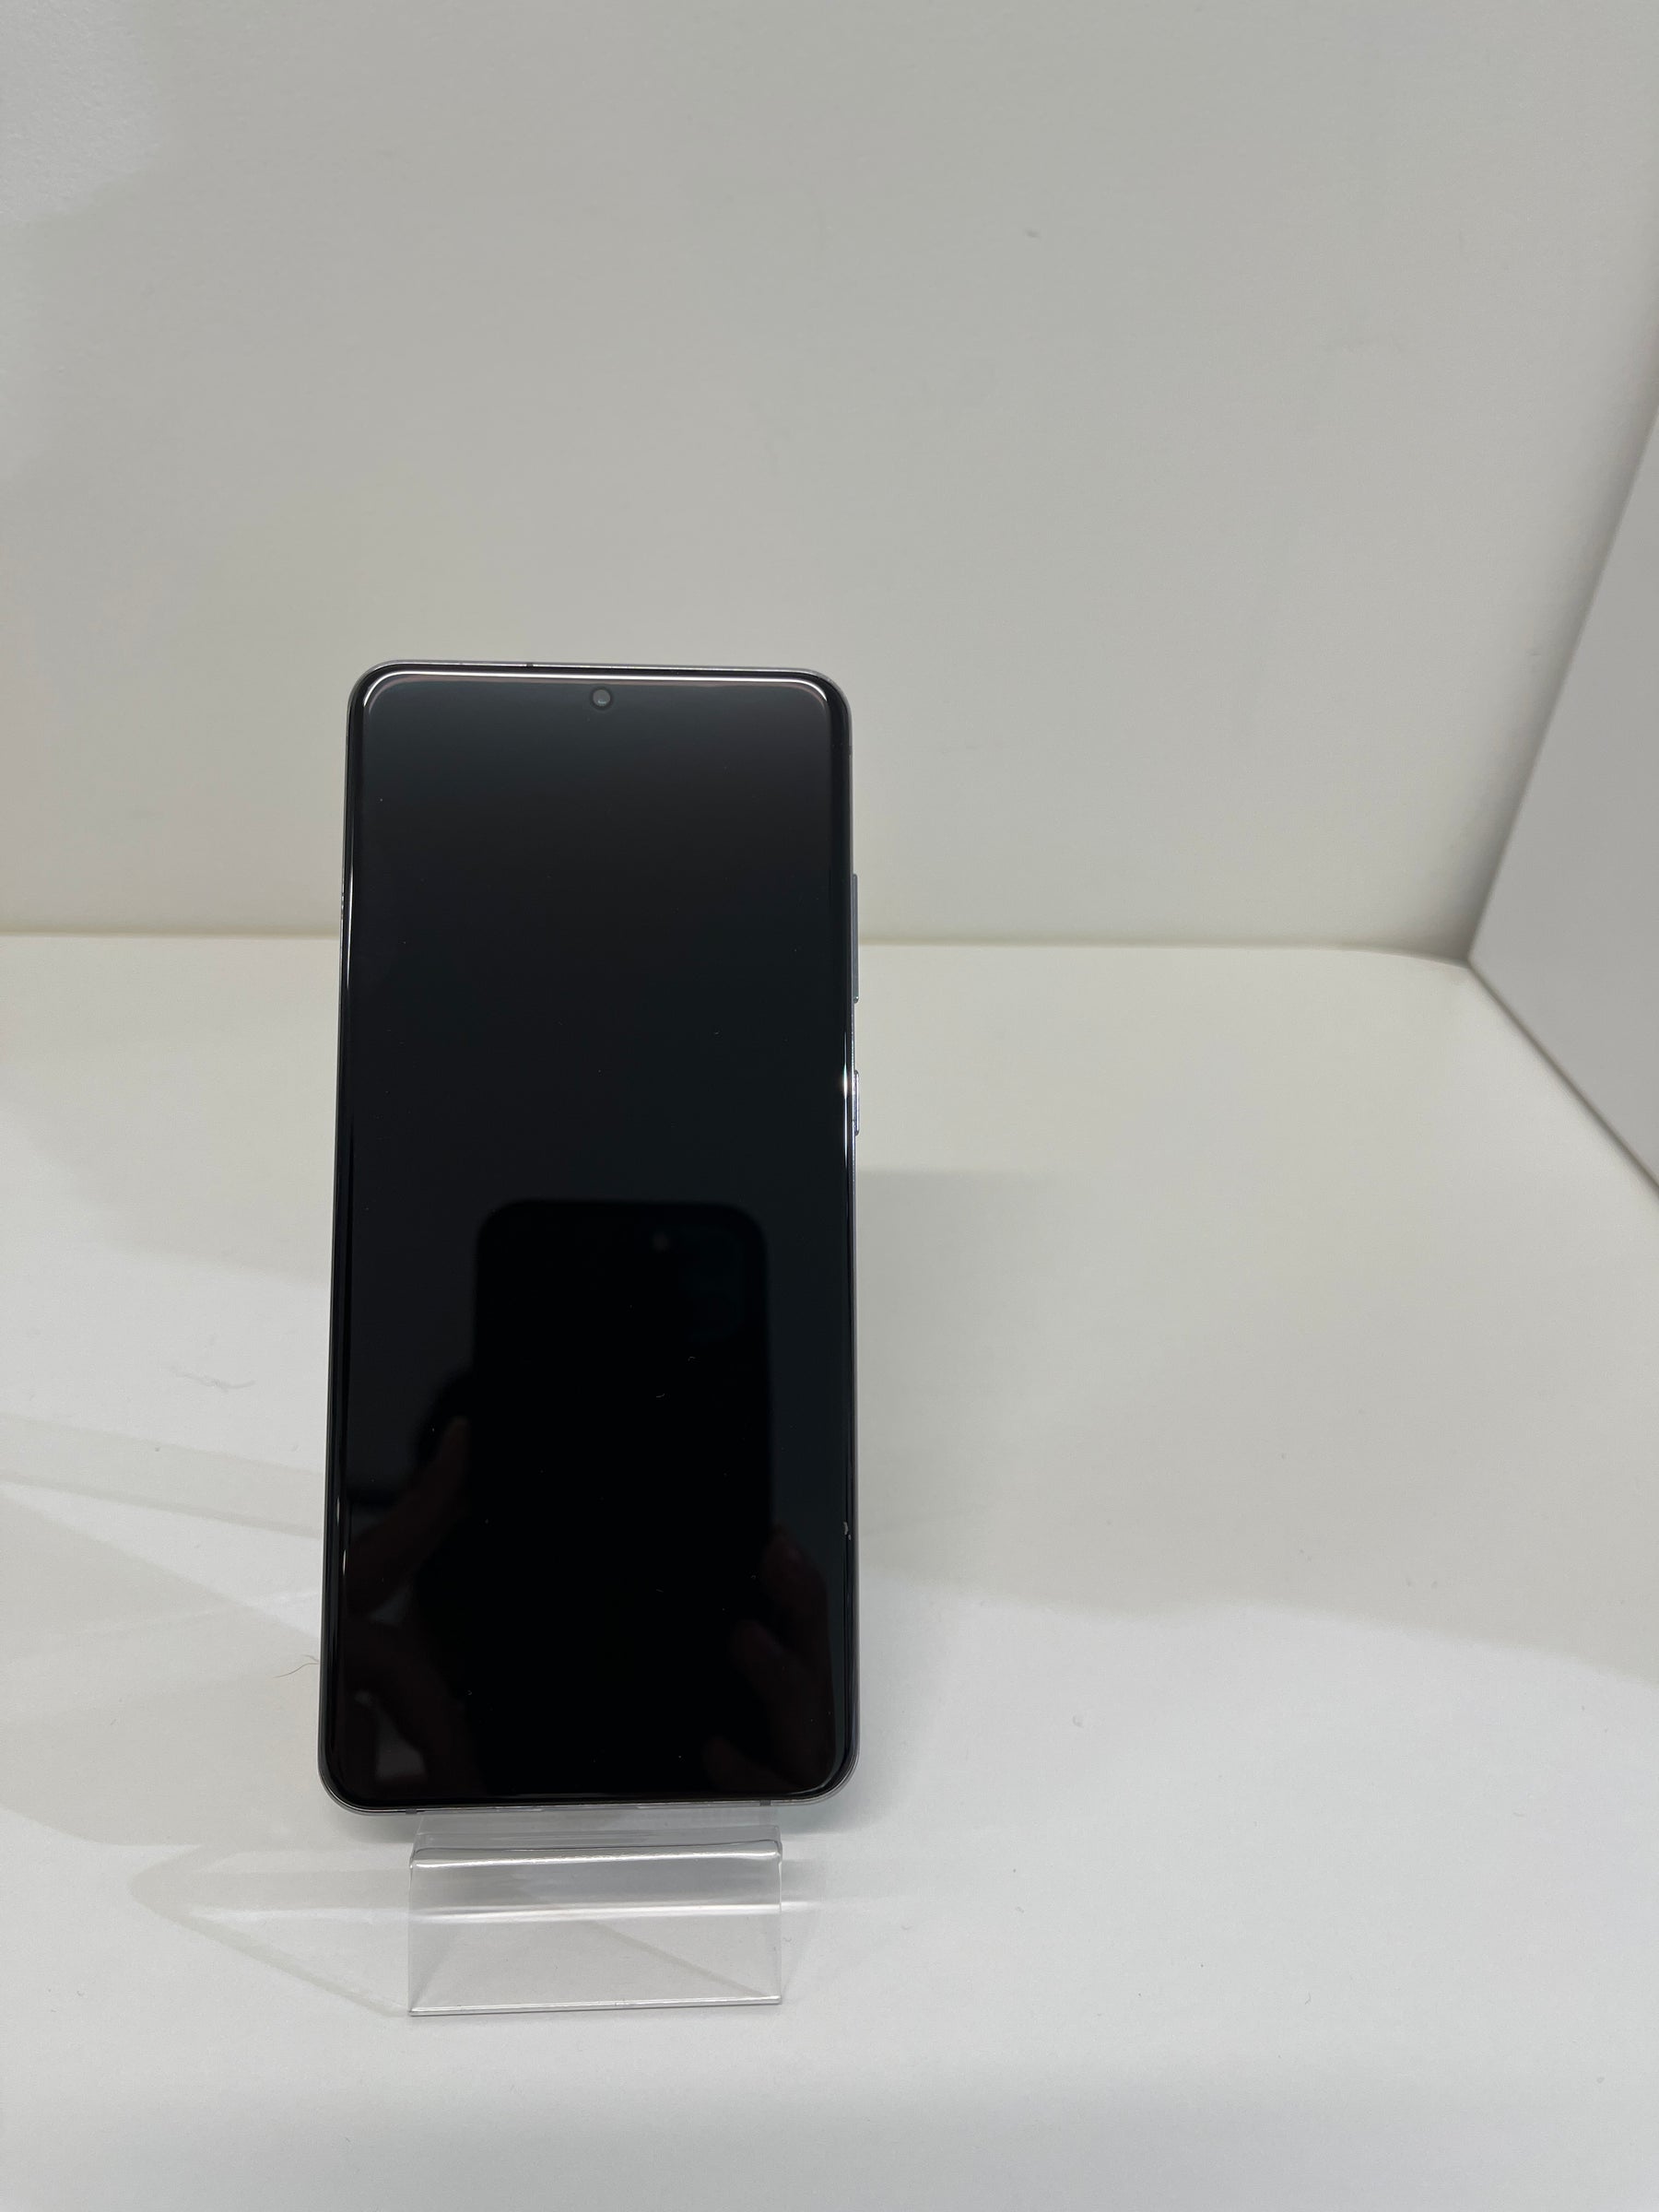 Samsung Galaxy S20 Ultra Black 128GB - Light Screen Burn